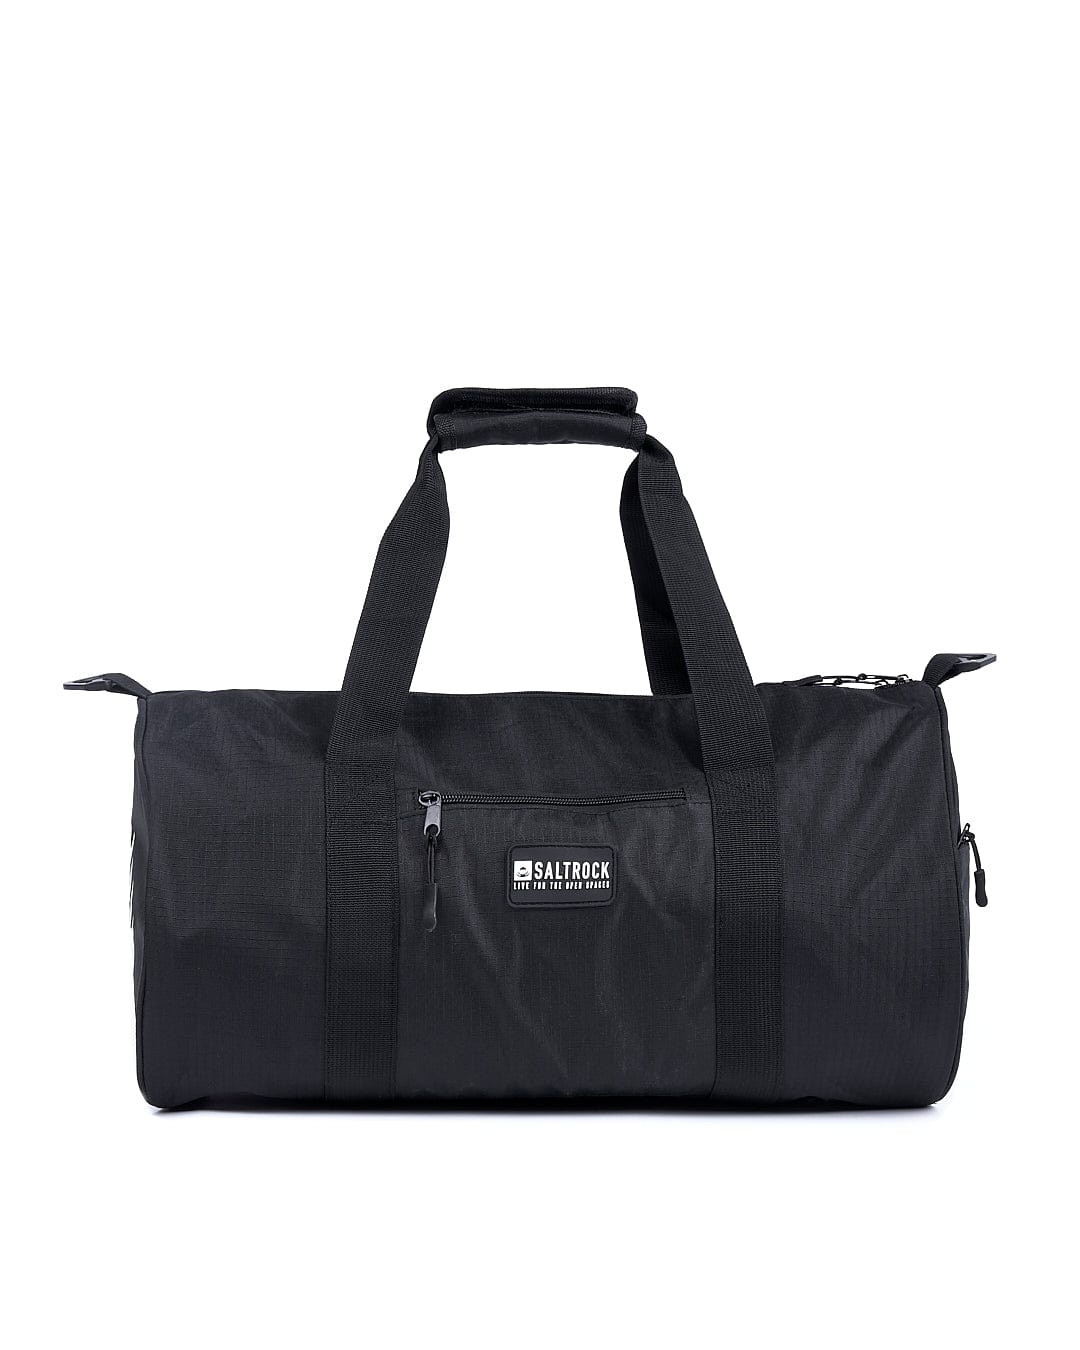 A Saltrock Balboa Holdall Black duffel bag with the logo on it.